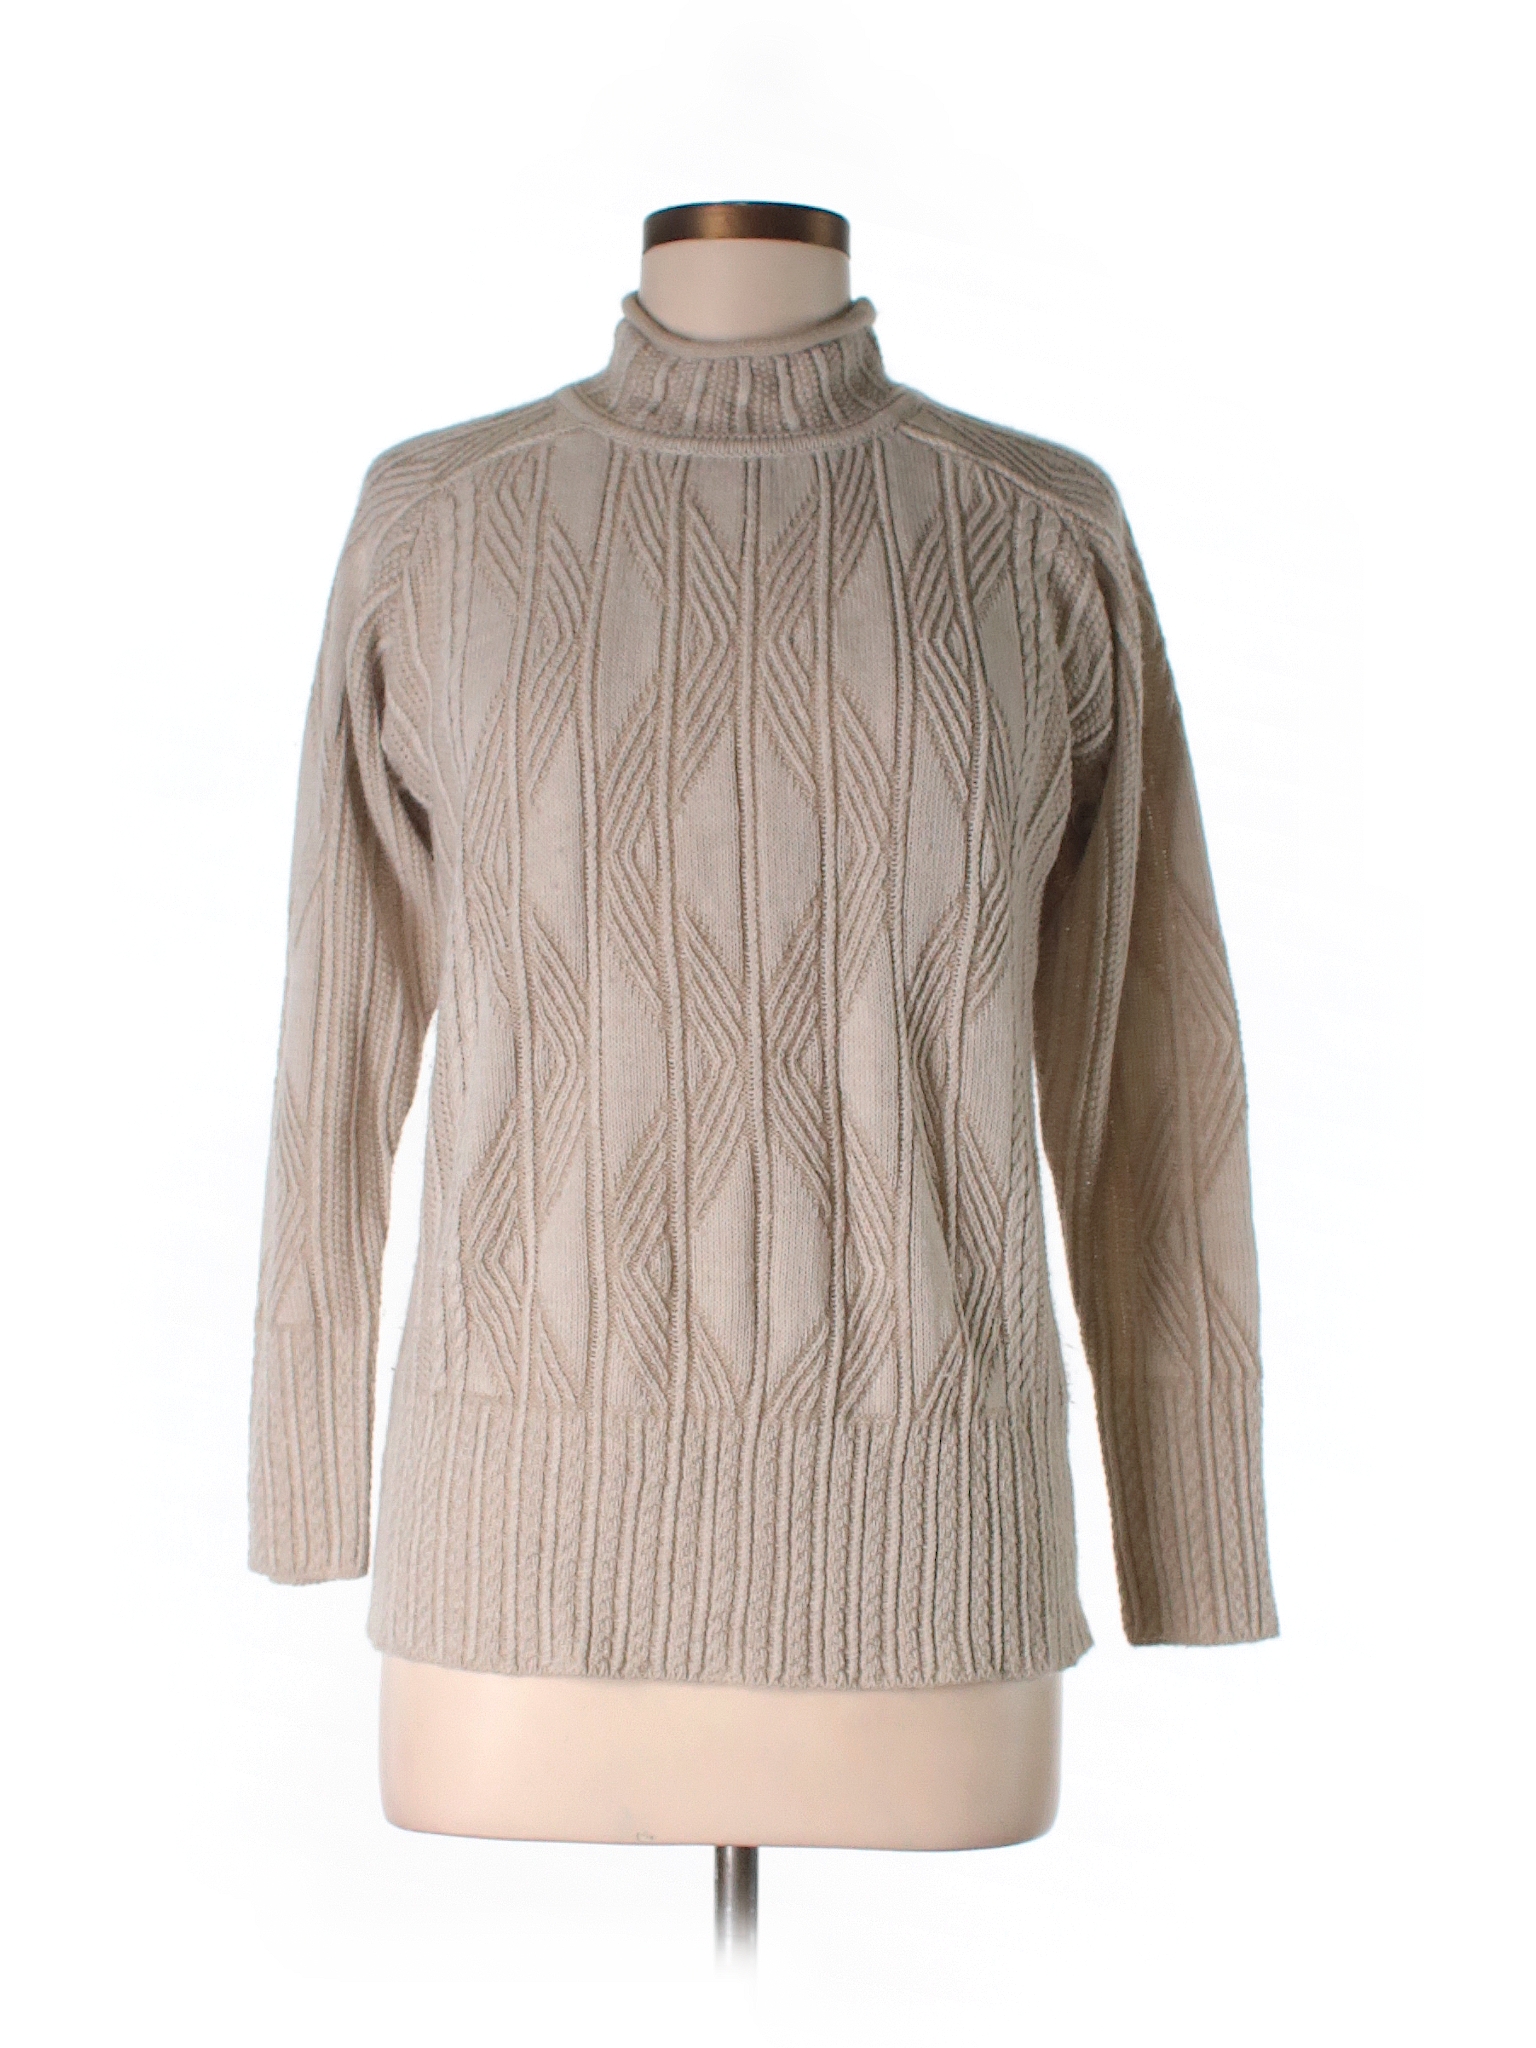 Hasting & Smith 100% Acrylic Print Beige Turtleneck Sweater Size S ...